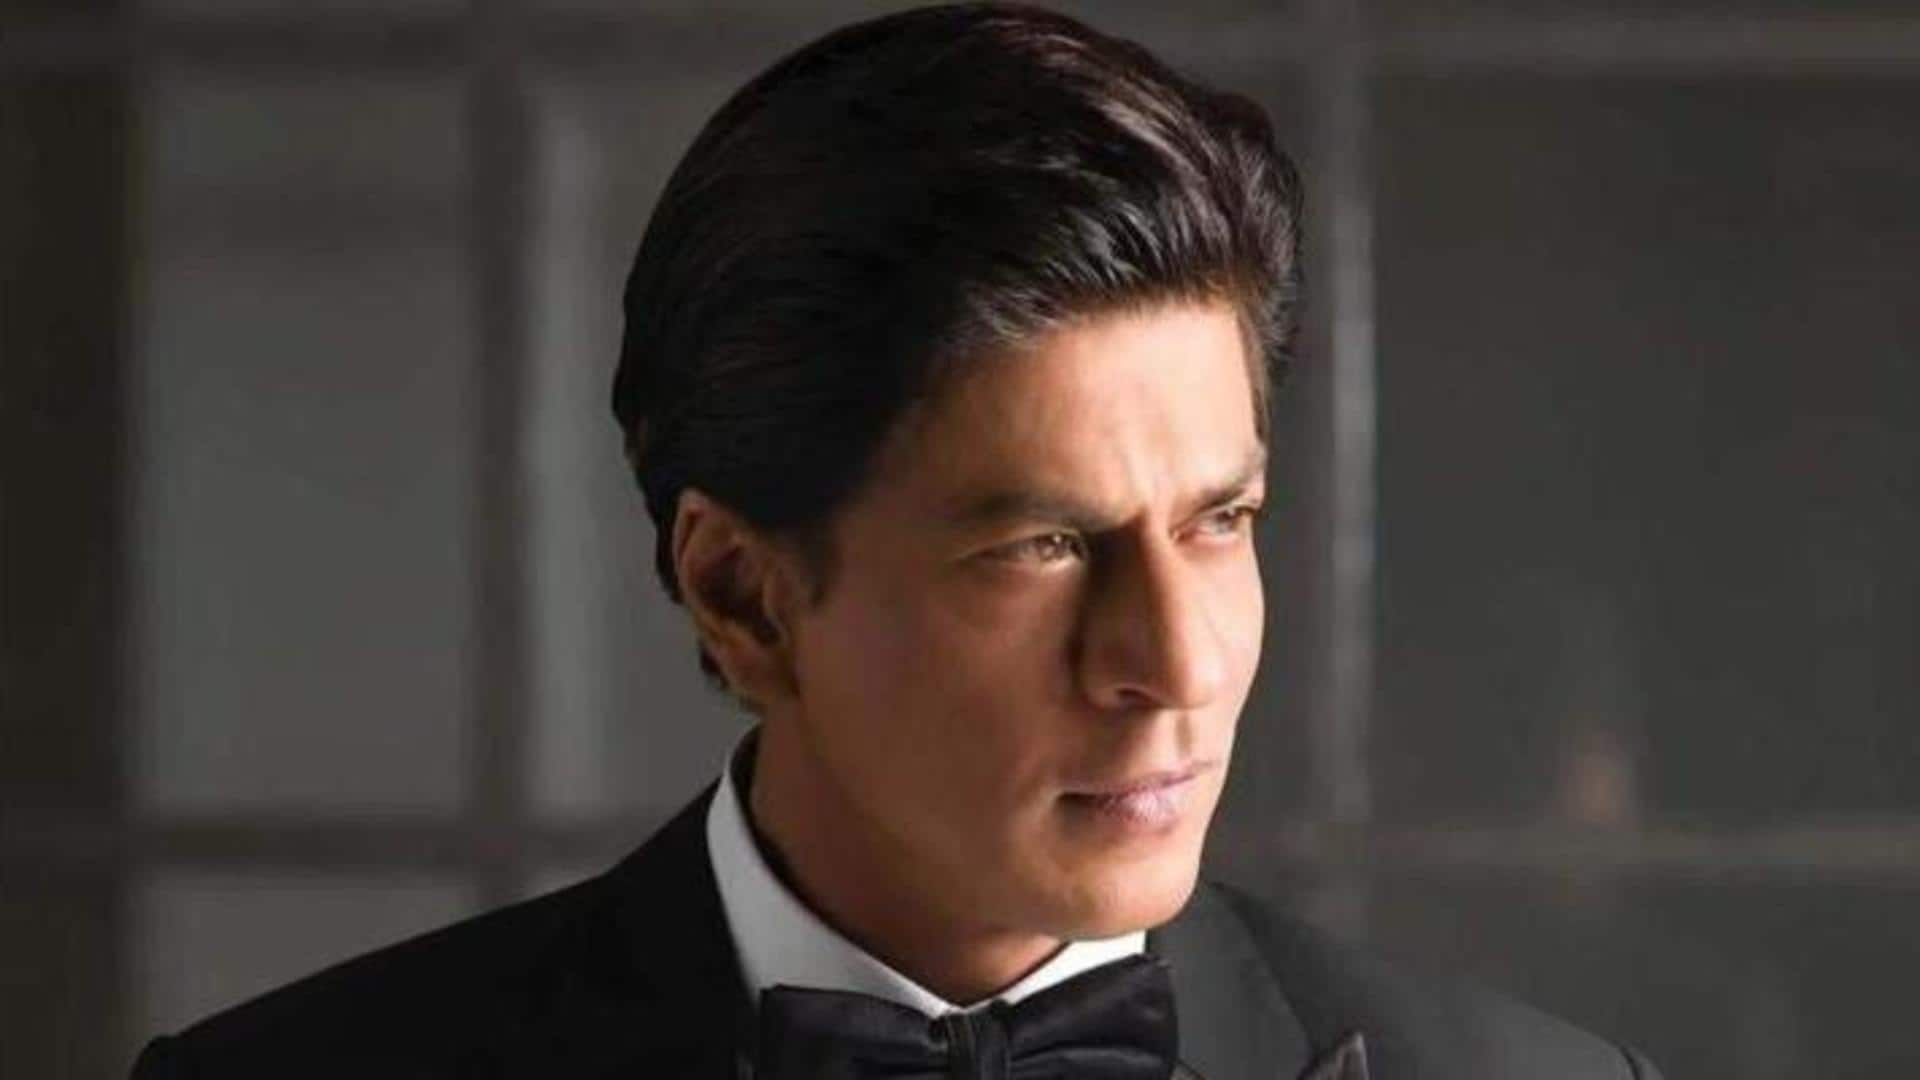 Times Shah Rukh Khan was honored on international platforms